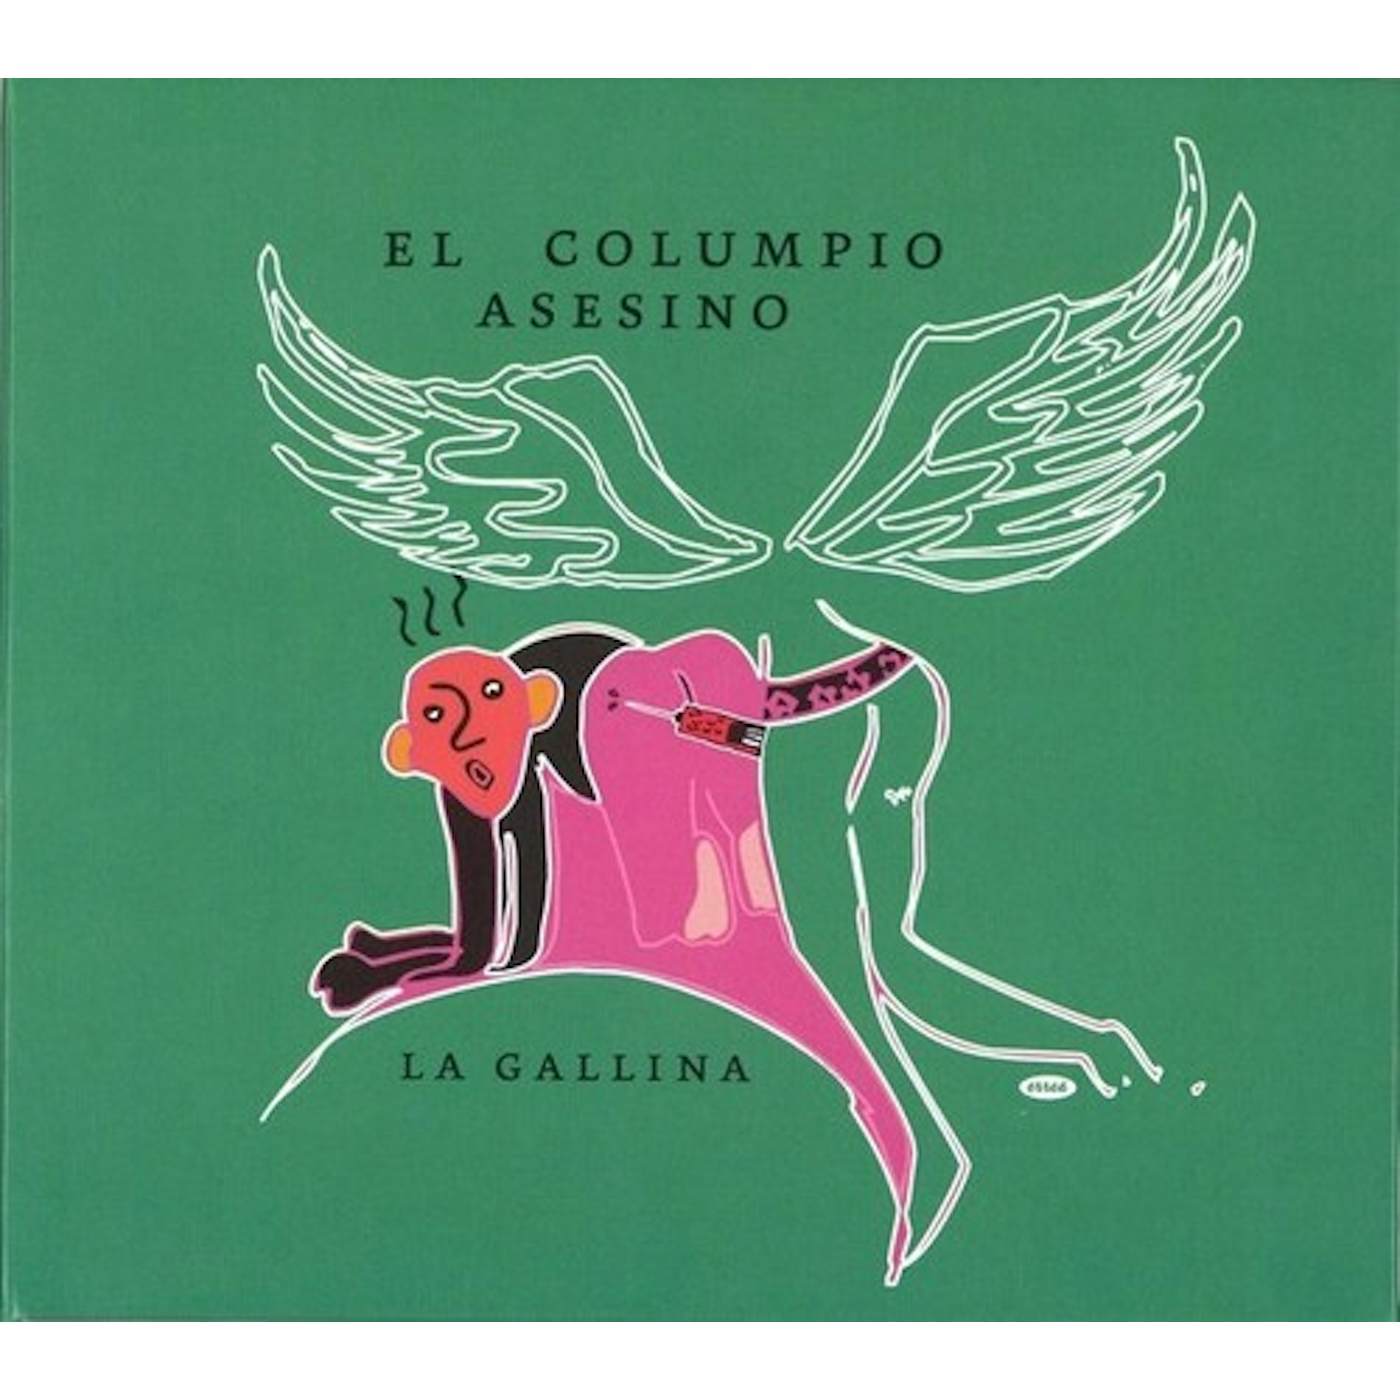 El Columpio Asesino LA GALLINA CD